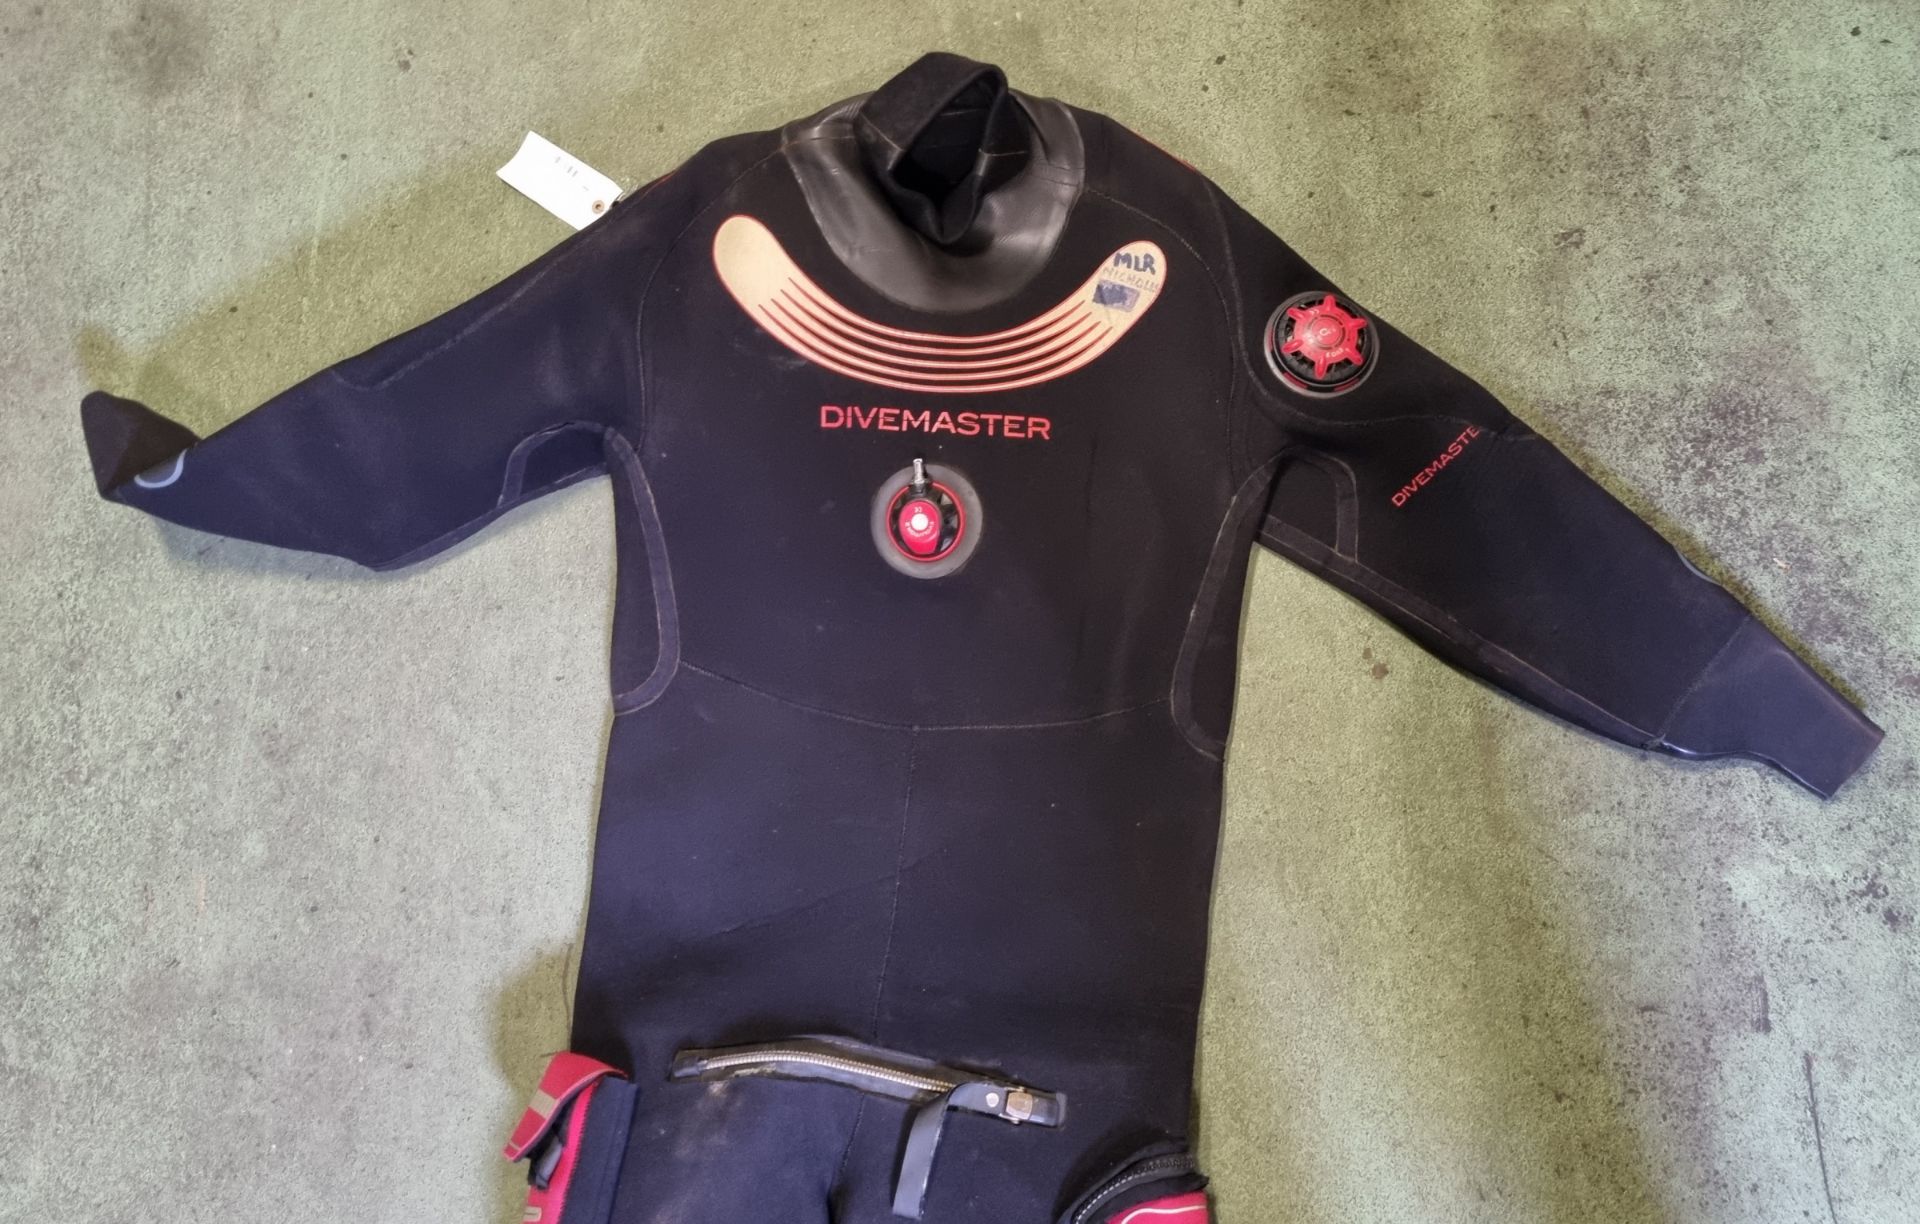 Origin Commercial Divemaster drysuit - Image 2 of 3